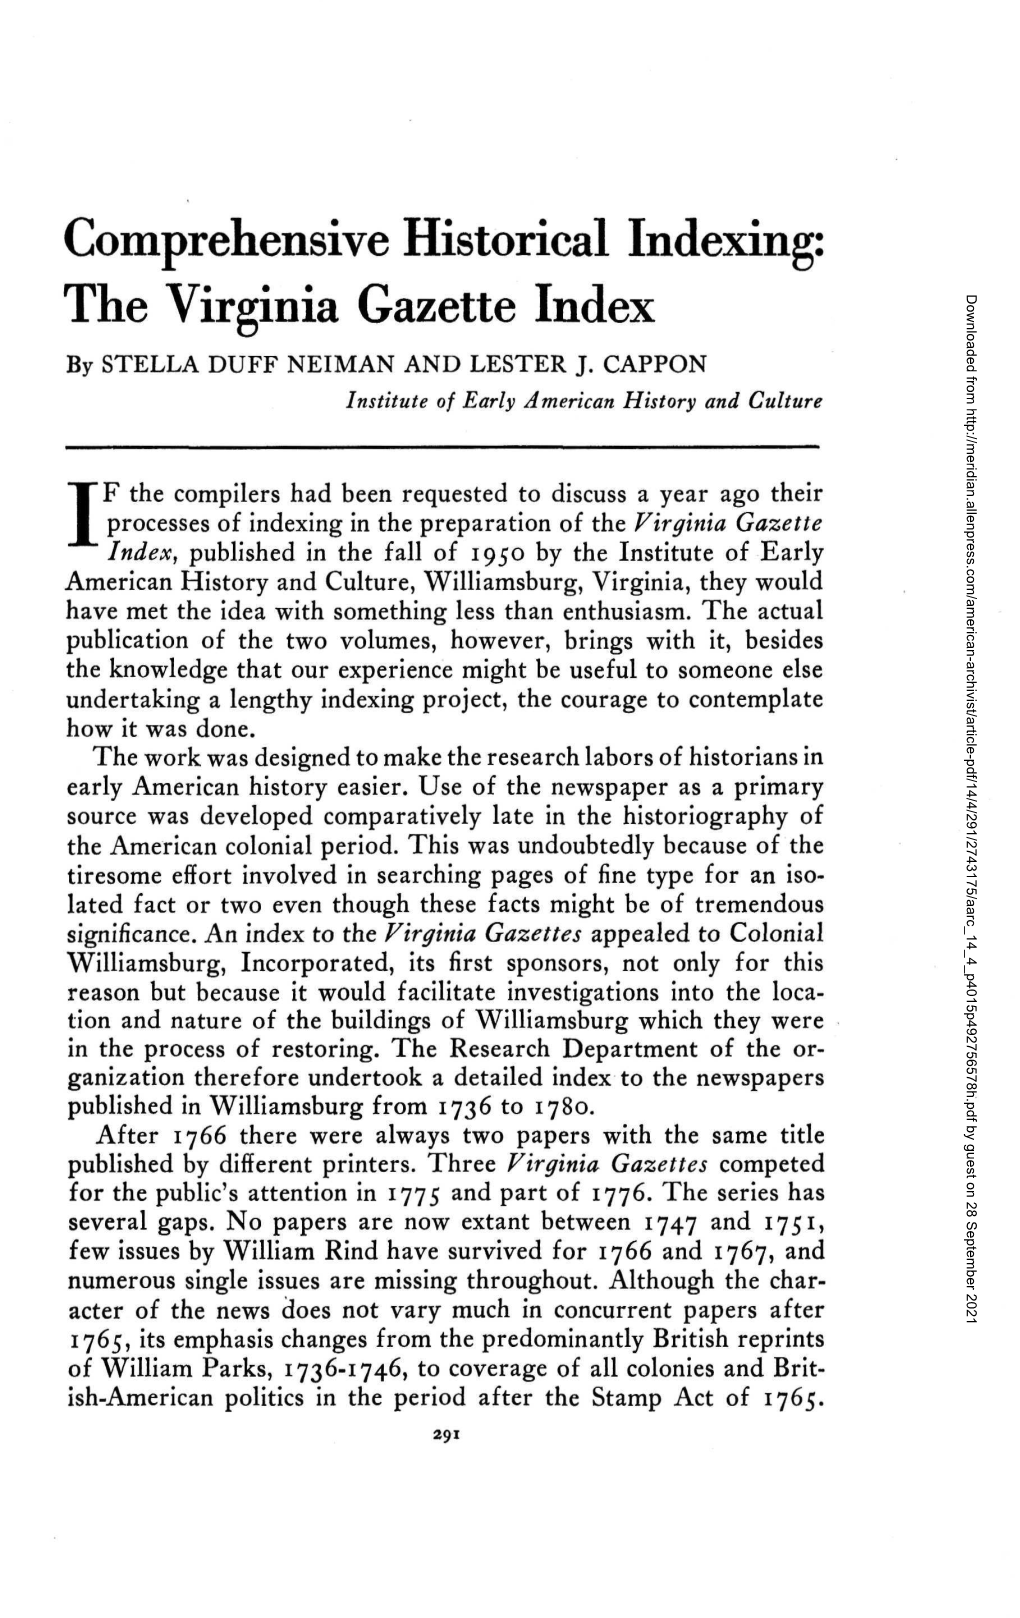 Comprehensive Historical Indexing: the Virginia Gazette Index